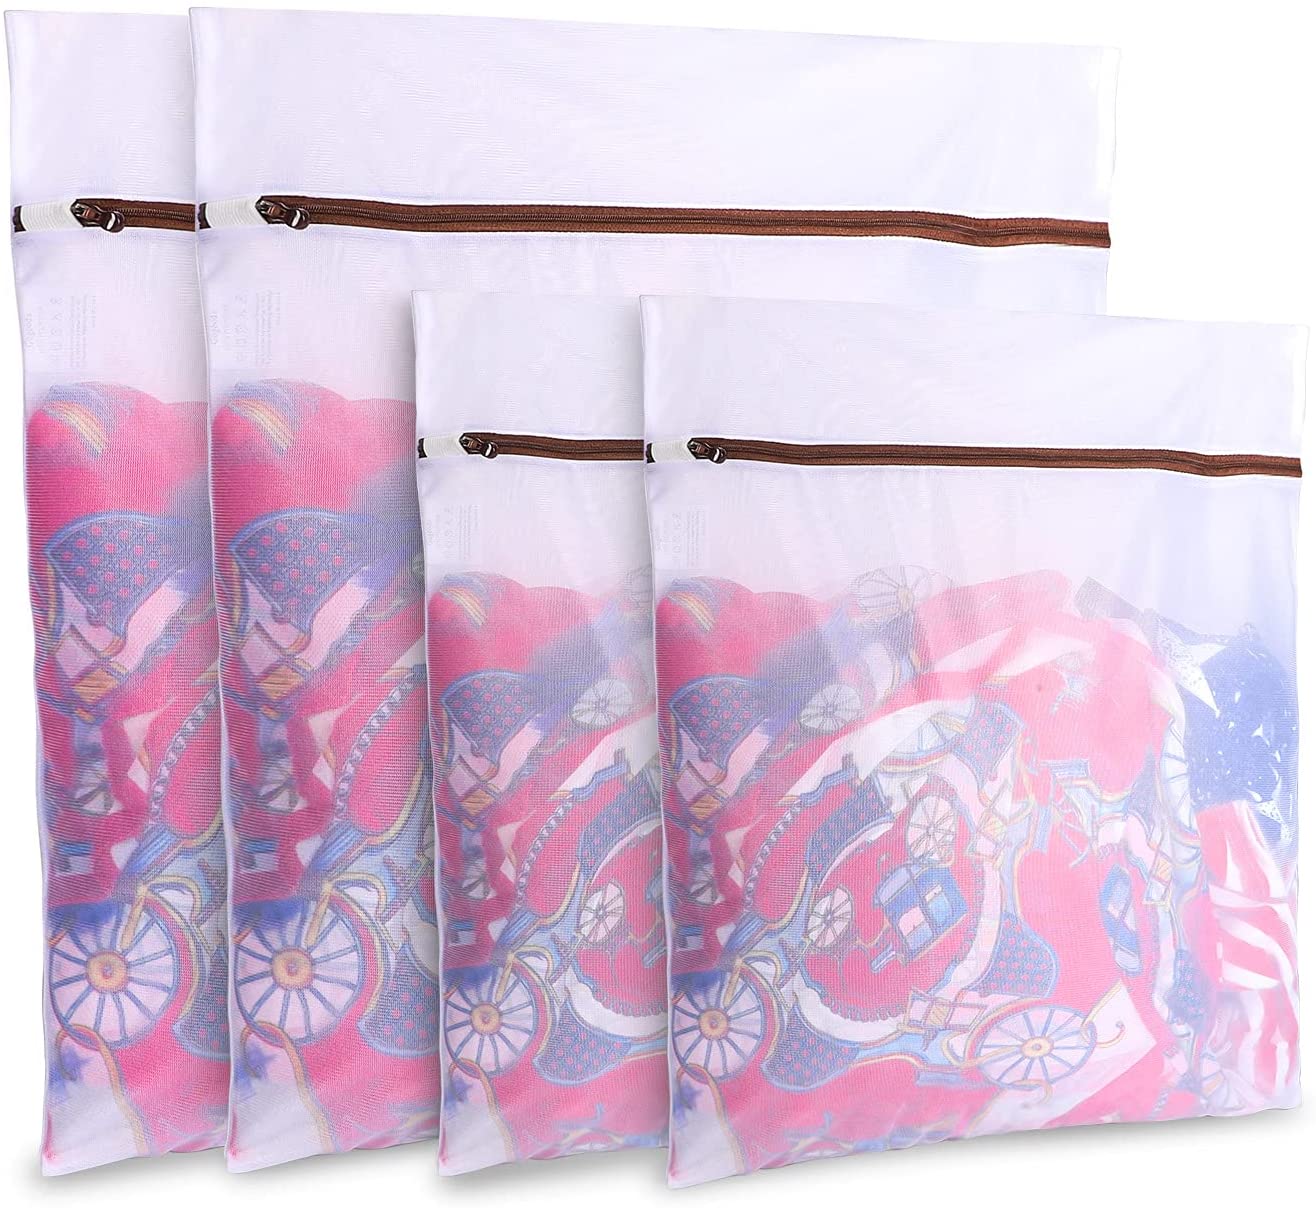 Travel Storage Gogooda 7Pcs Mesh Laundry Bags for Delicates with Premium Zipper 